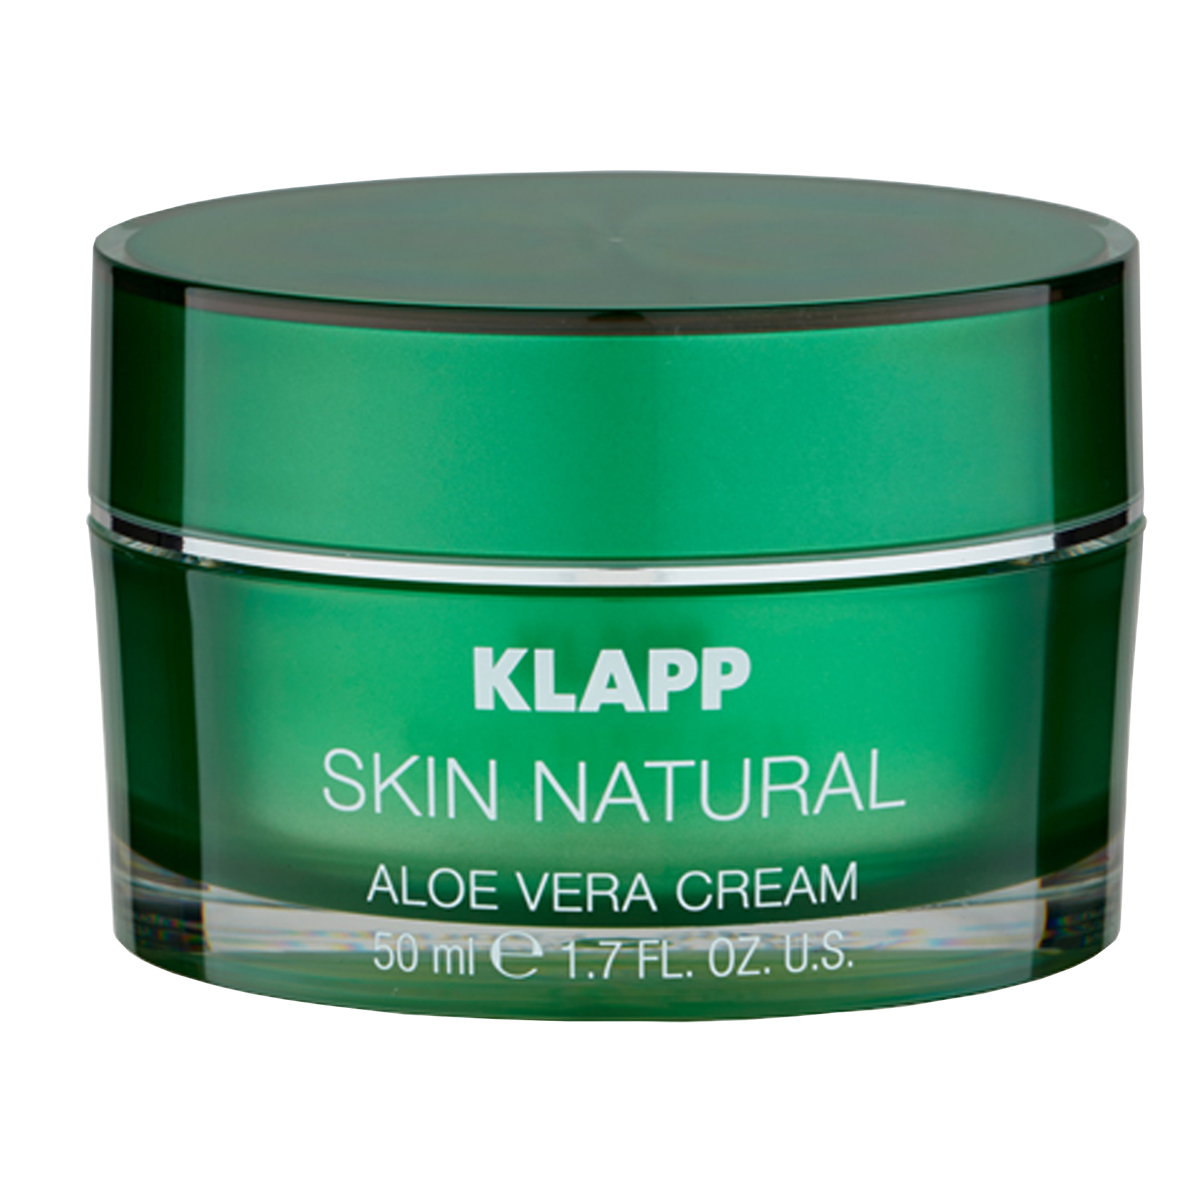 KLAPP Skin Natural Aloe Vera Cream 50 ml